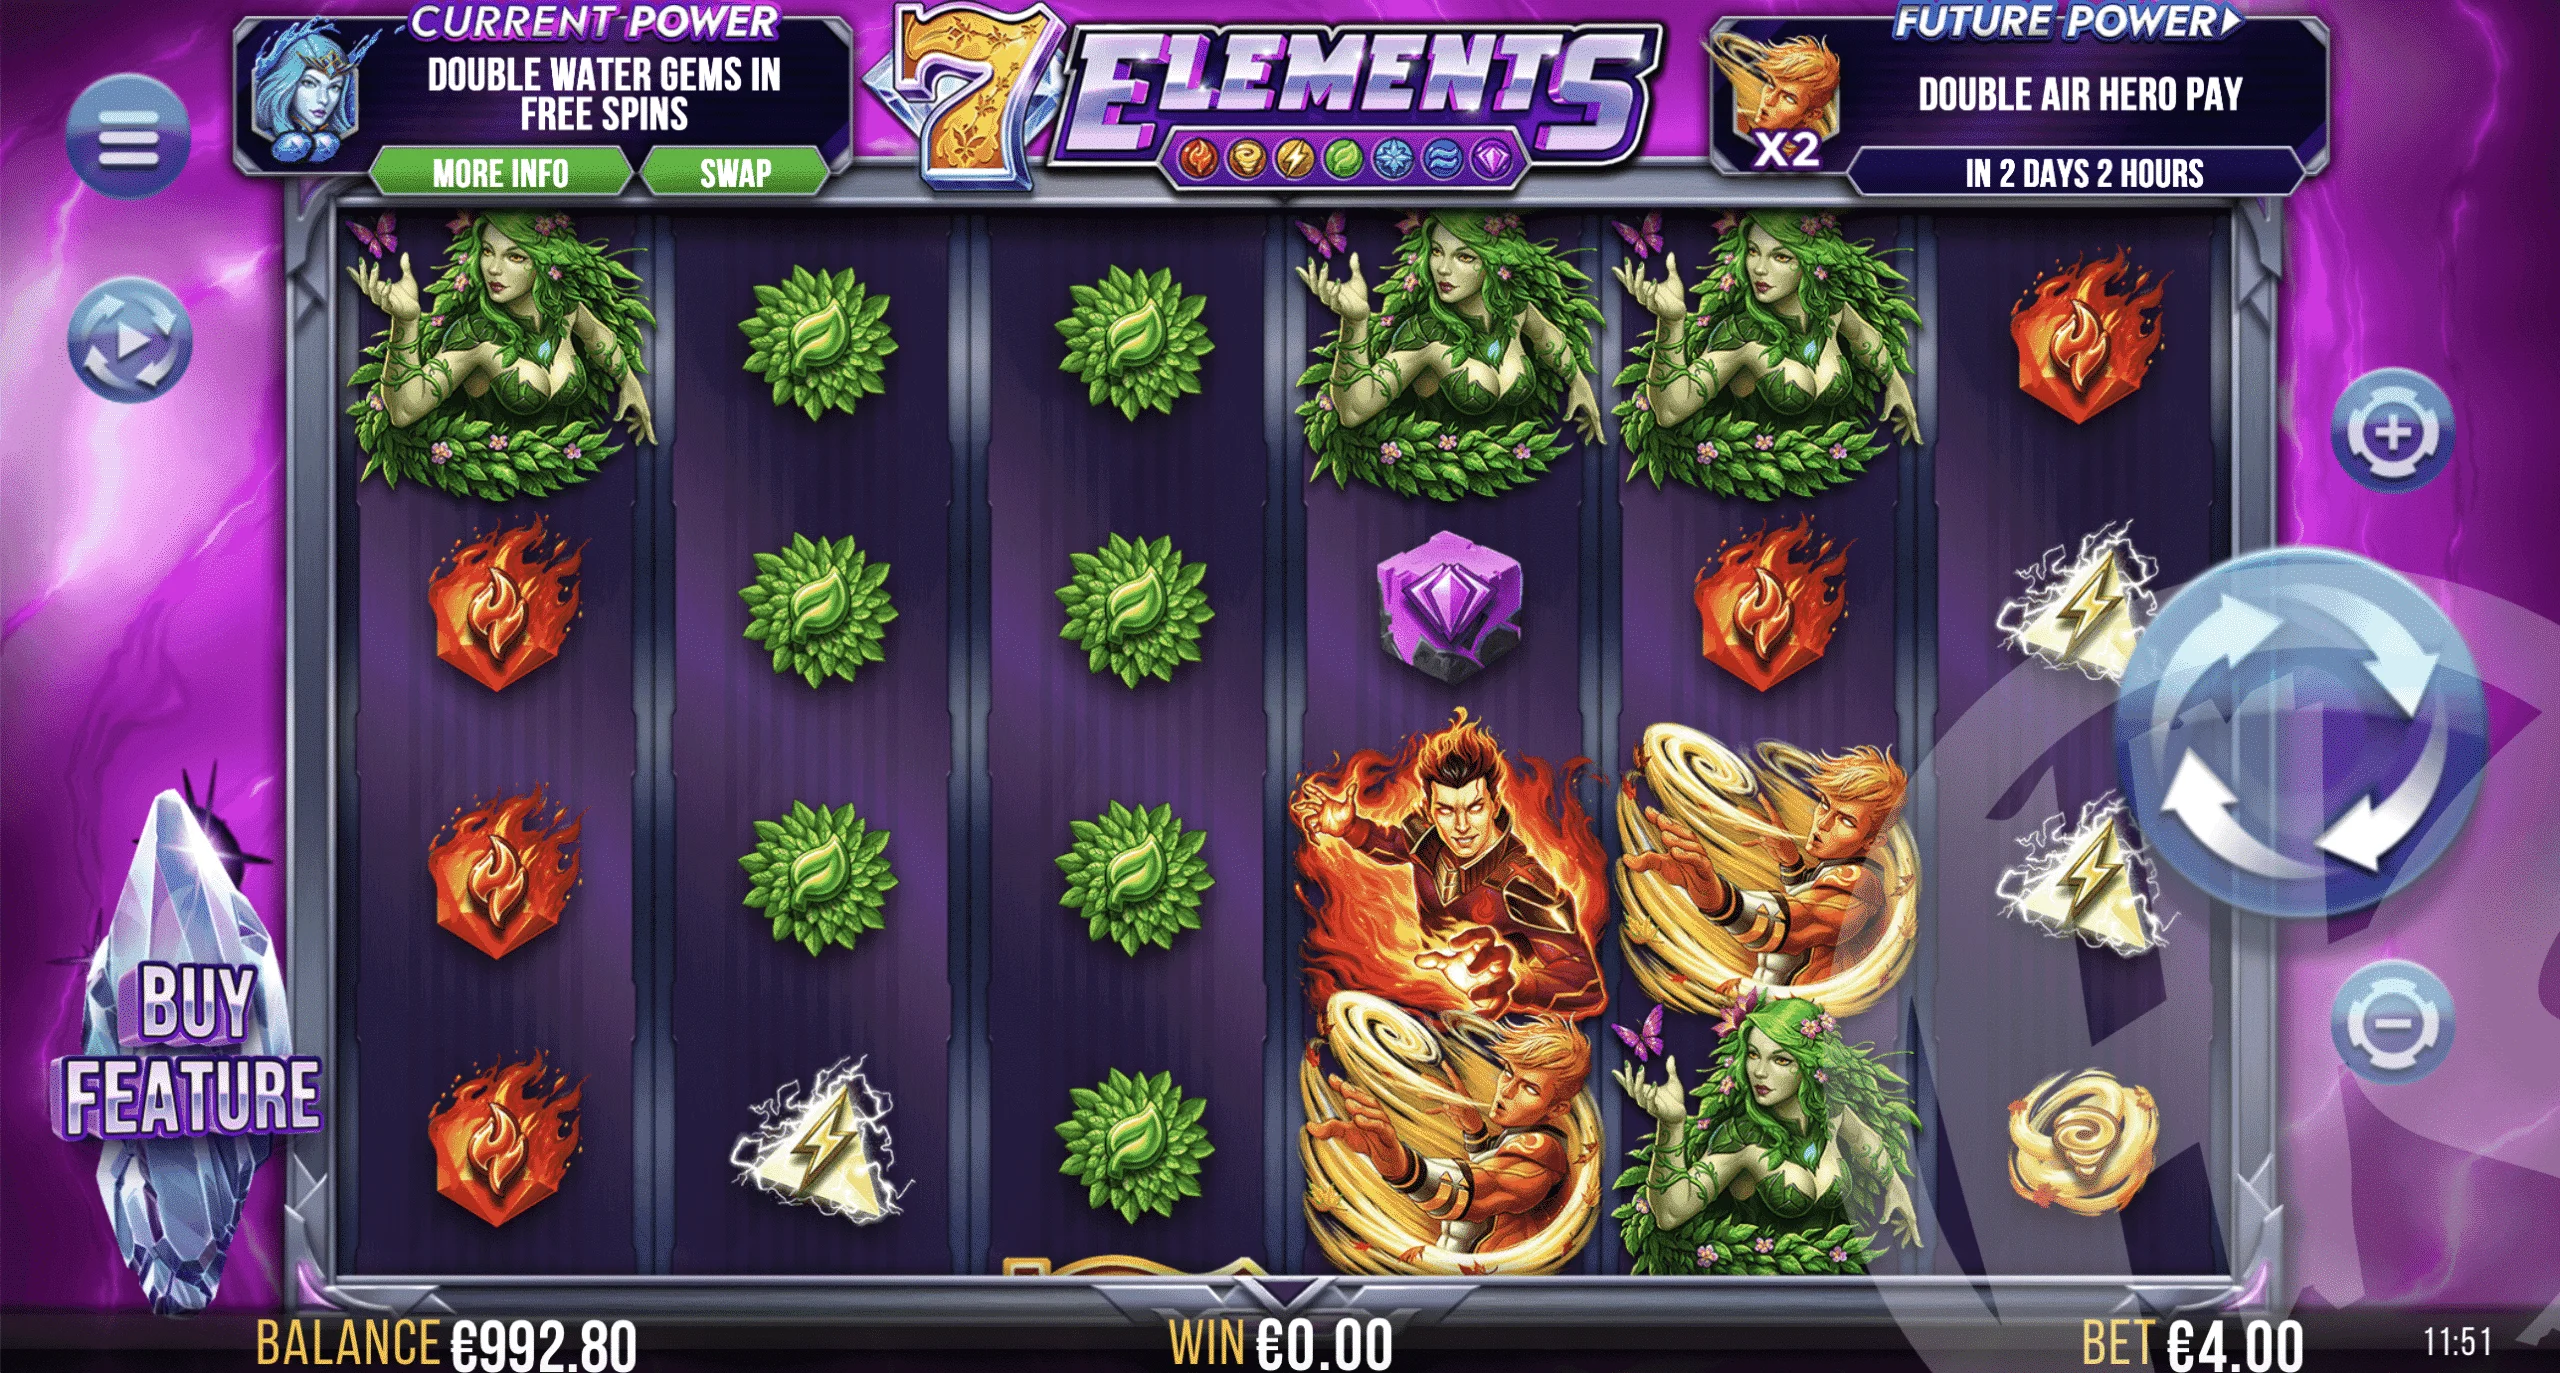 7 Elements Base Game